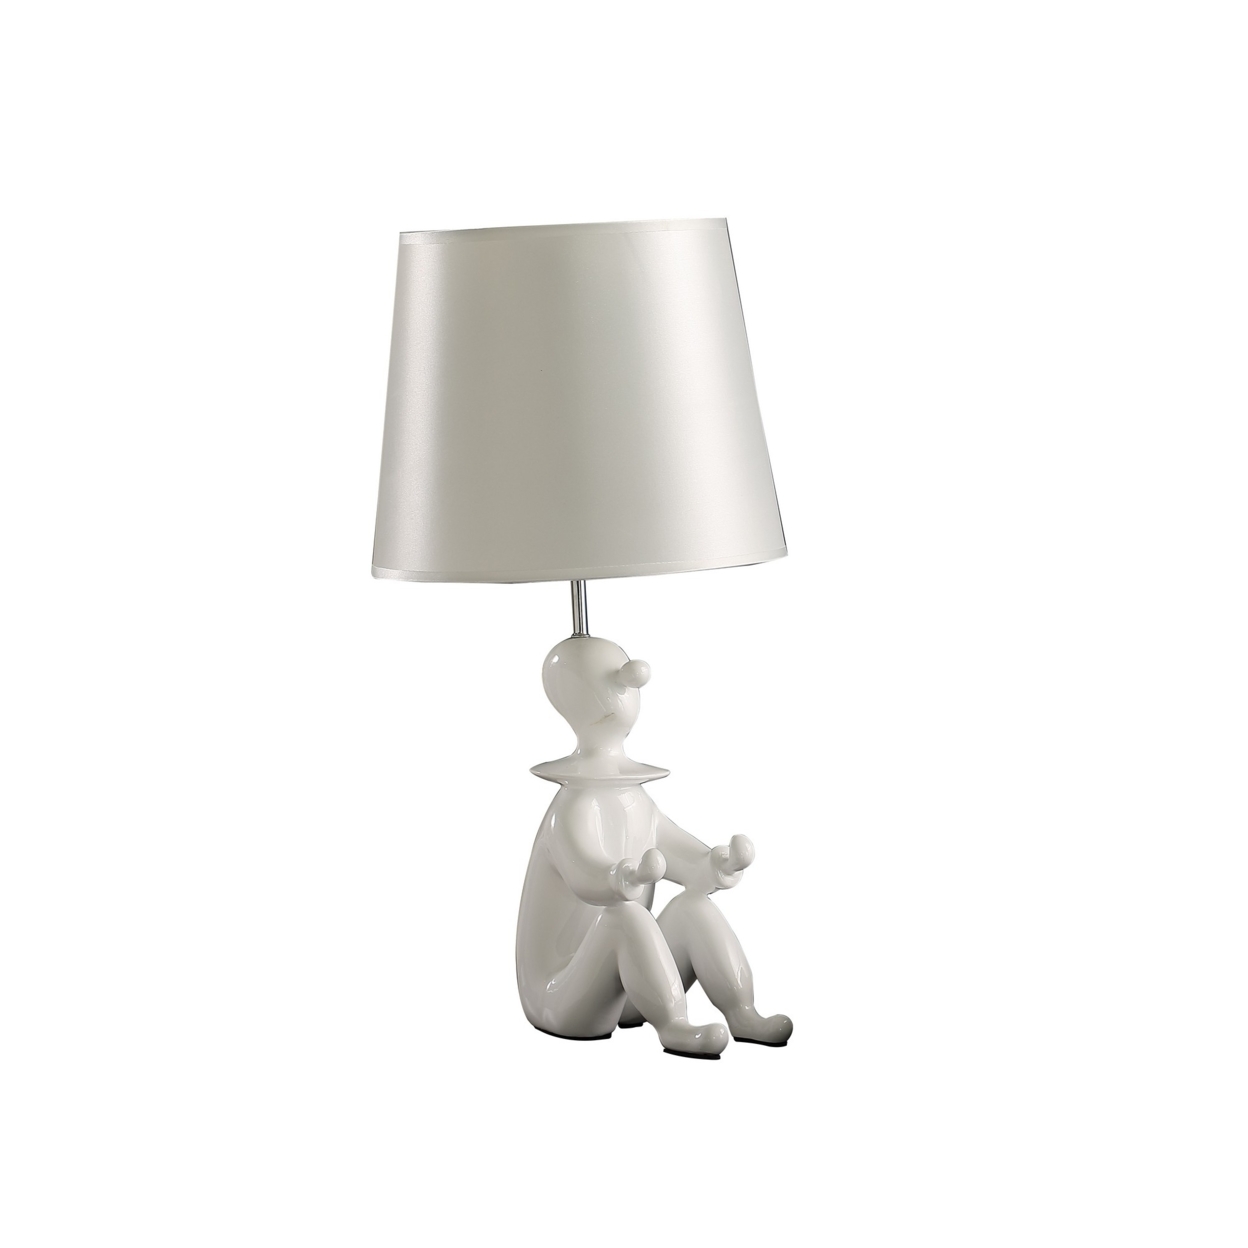 Fabric Shade Table Lamp With Polyresin Sitting Clown Base, White- Saltoro Sherpi